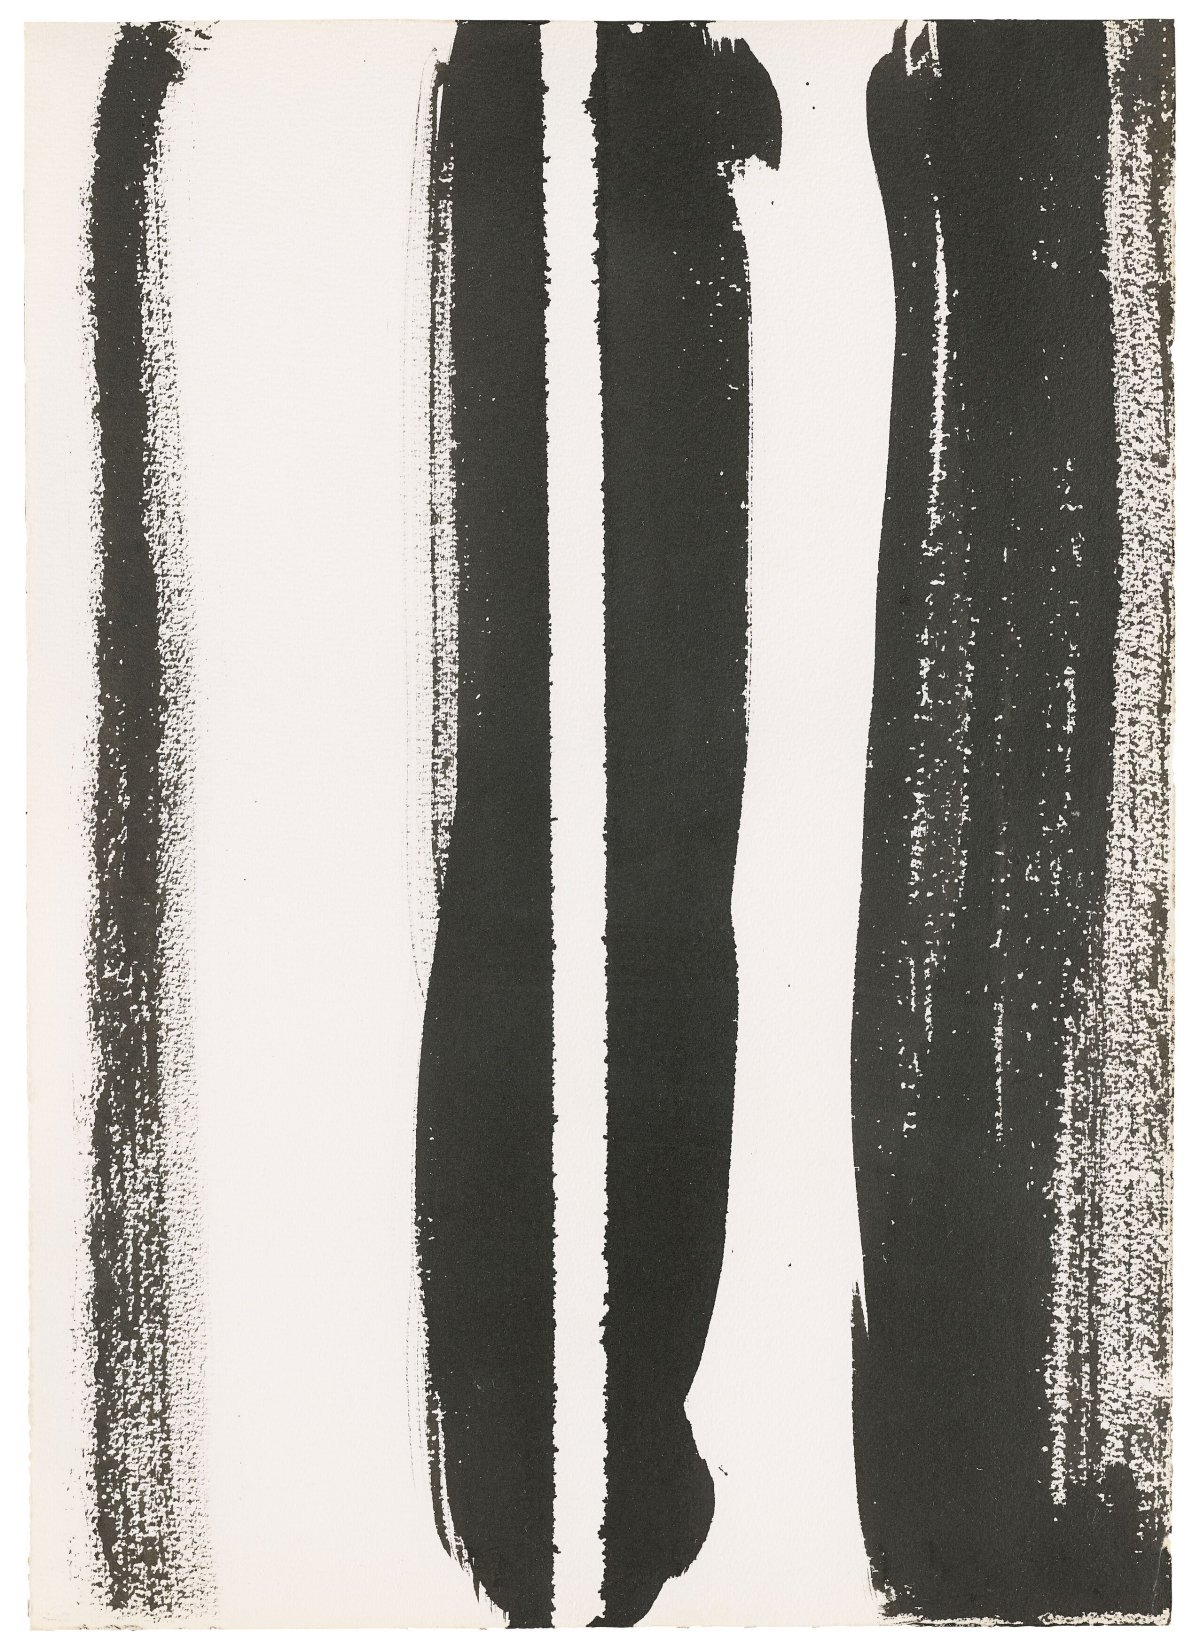 Barnett Newman, Untitled, 1960